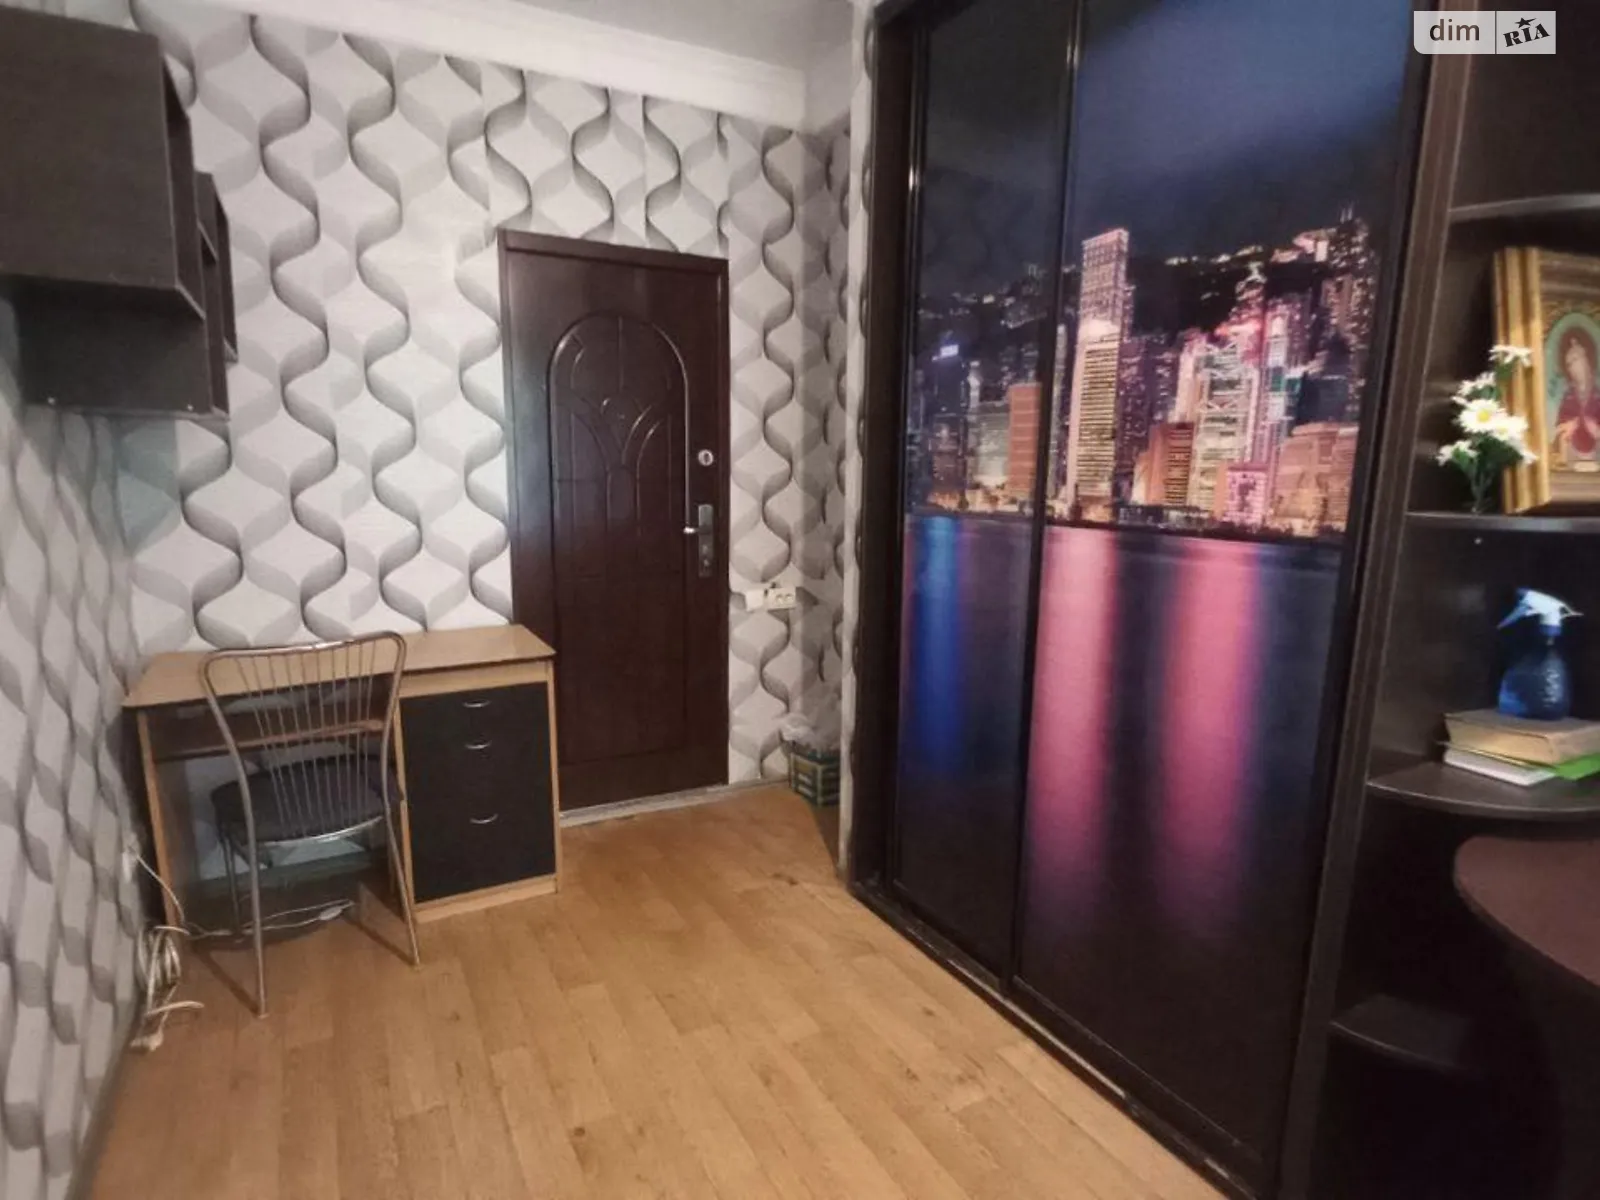 Продается комната 15 кв. м в Одессе, цена: 6800 $ - фото 1